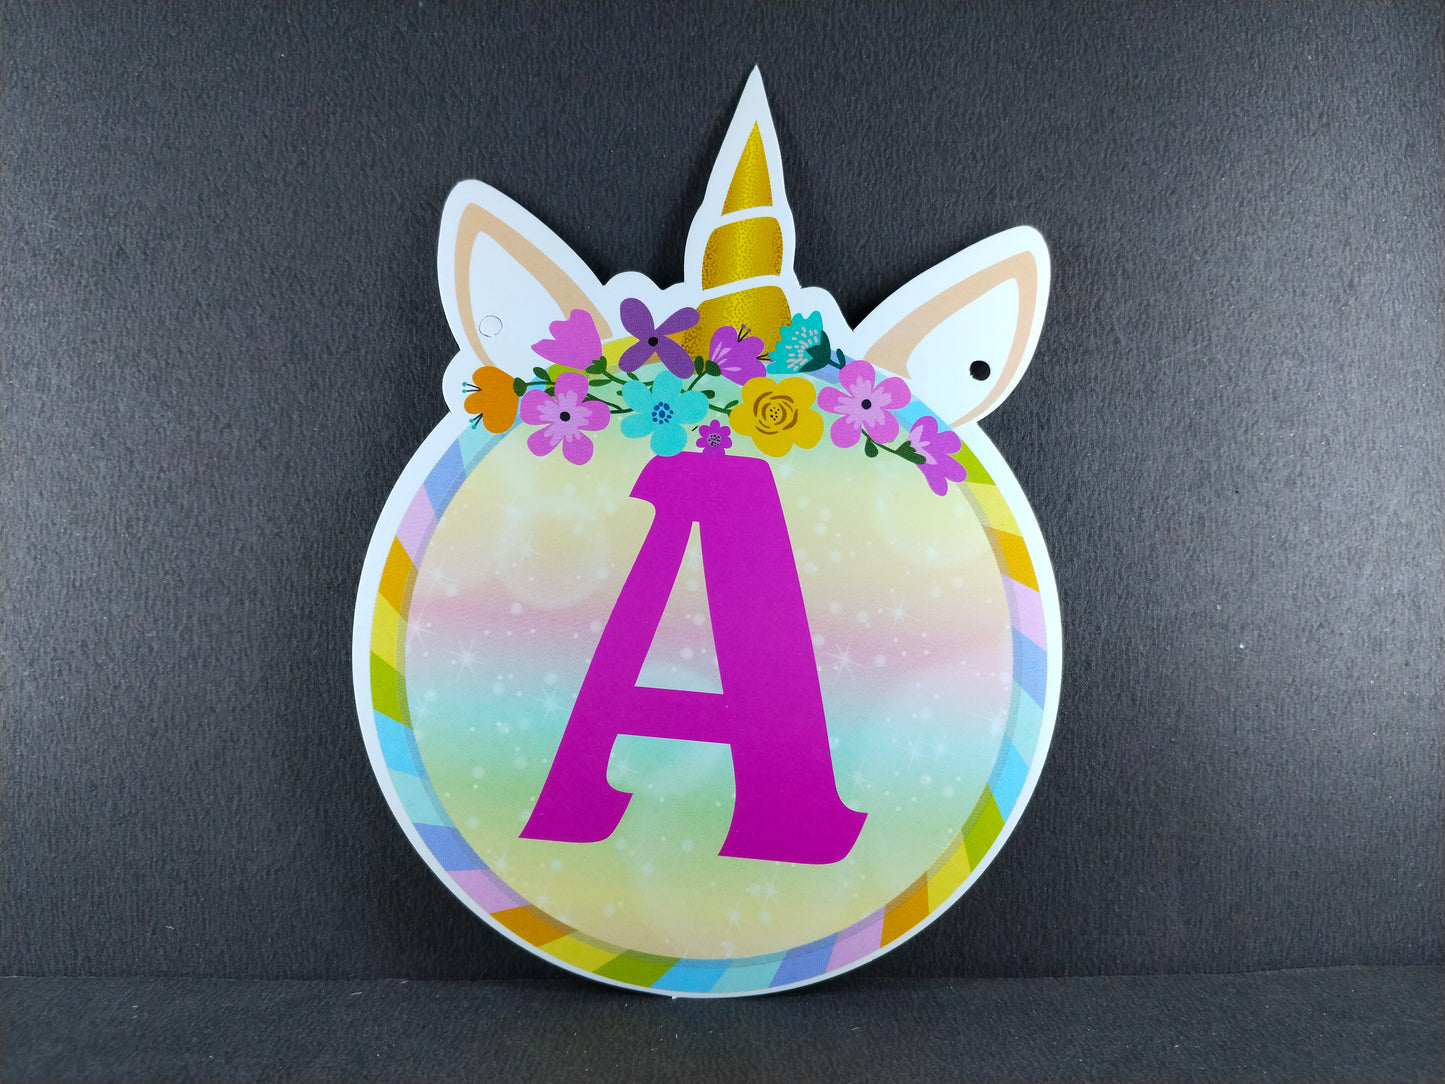 Birthday Decoration Kit - Unicorn Theme for Simple Birthday Decorations at Home